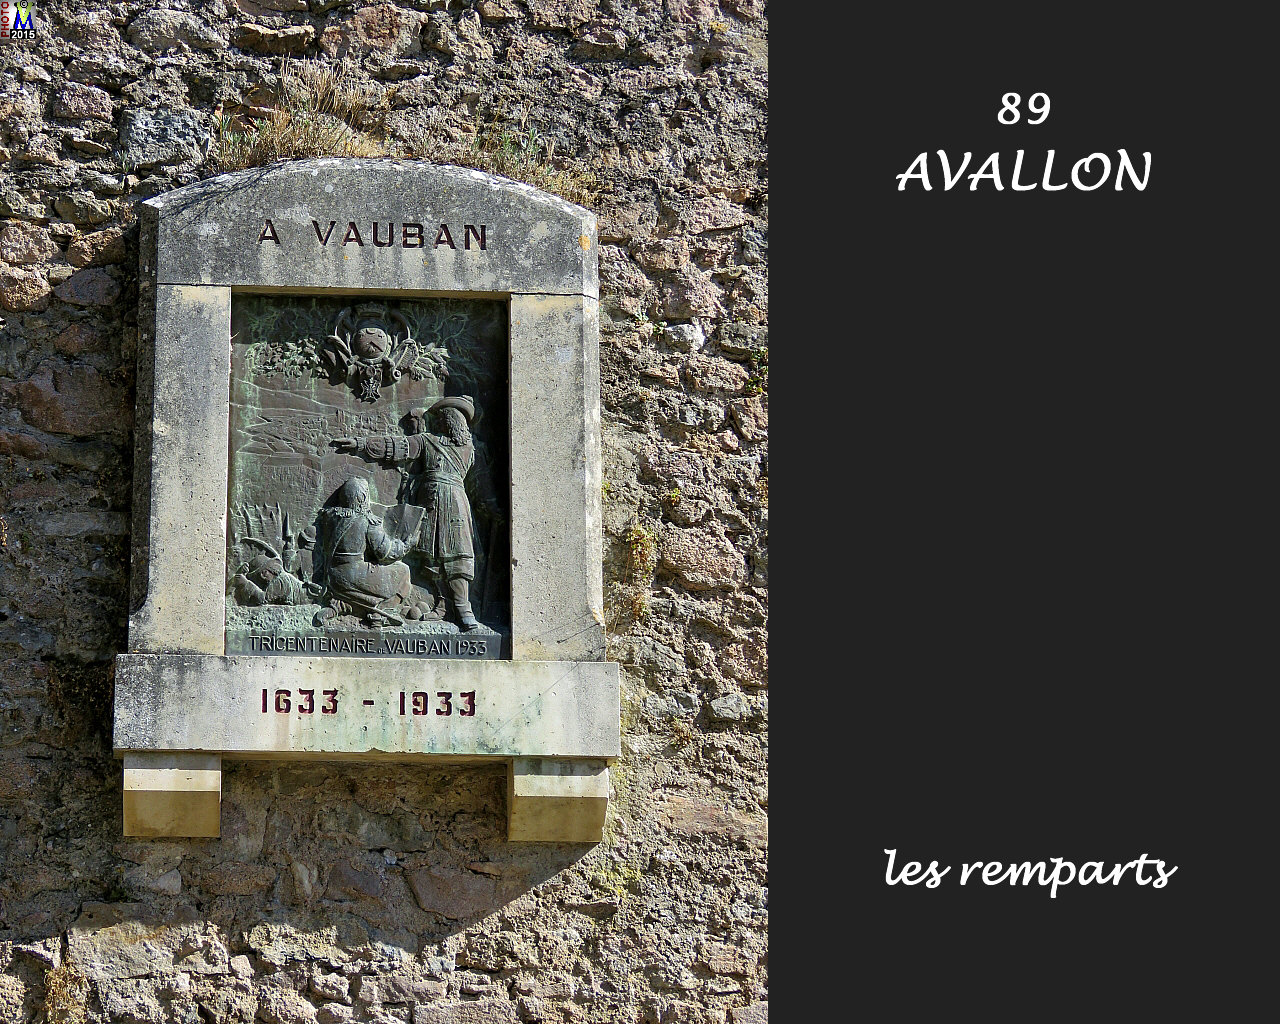 89AVALLON-remparts_112.jpg